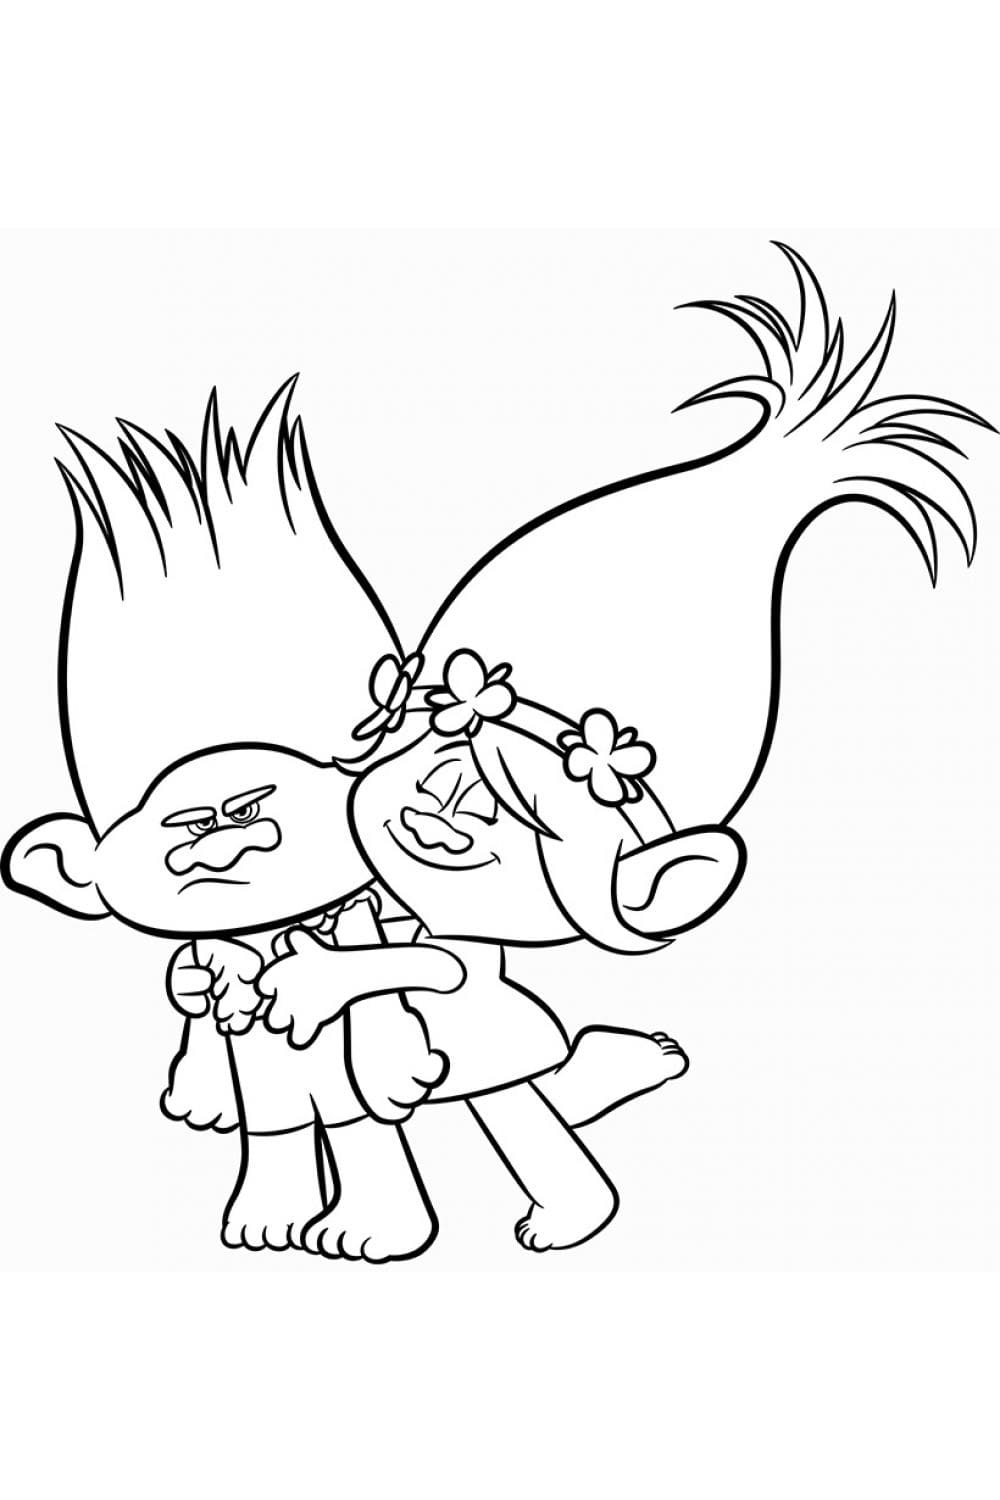 Branche et Princesse Poppy coloring page